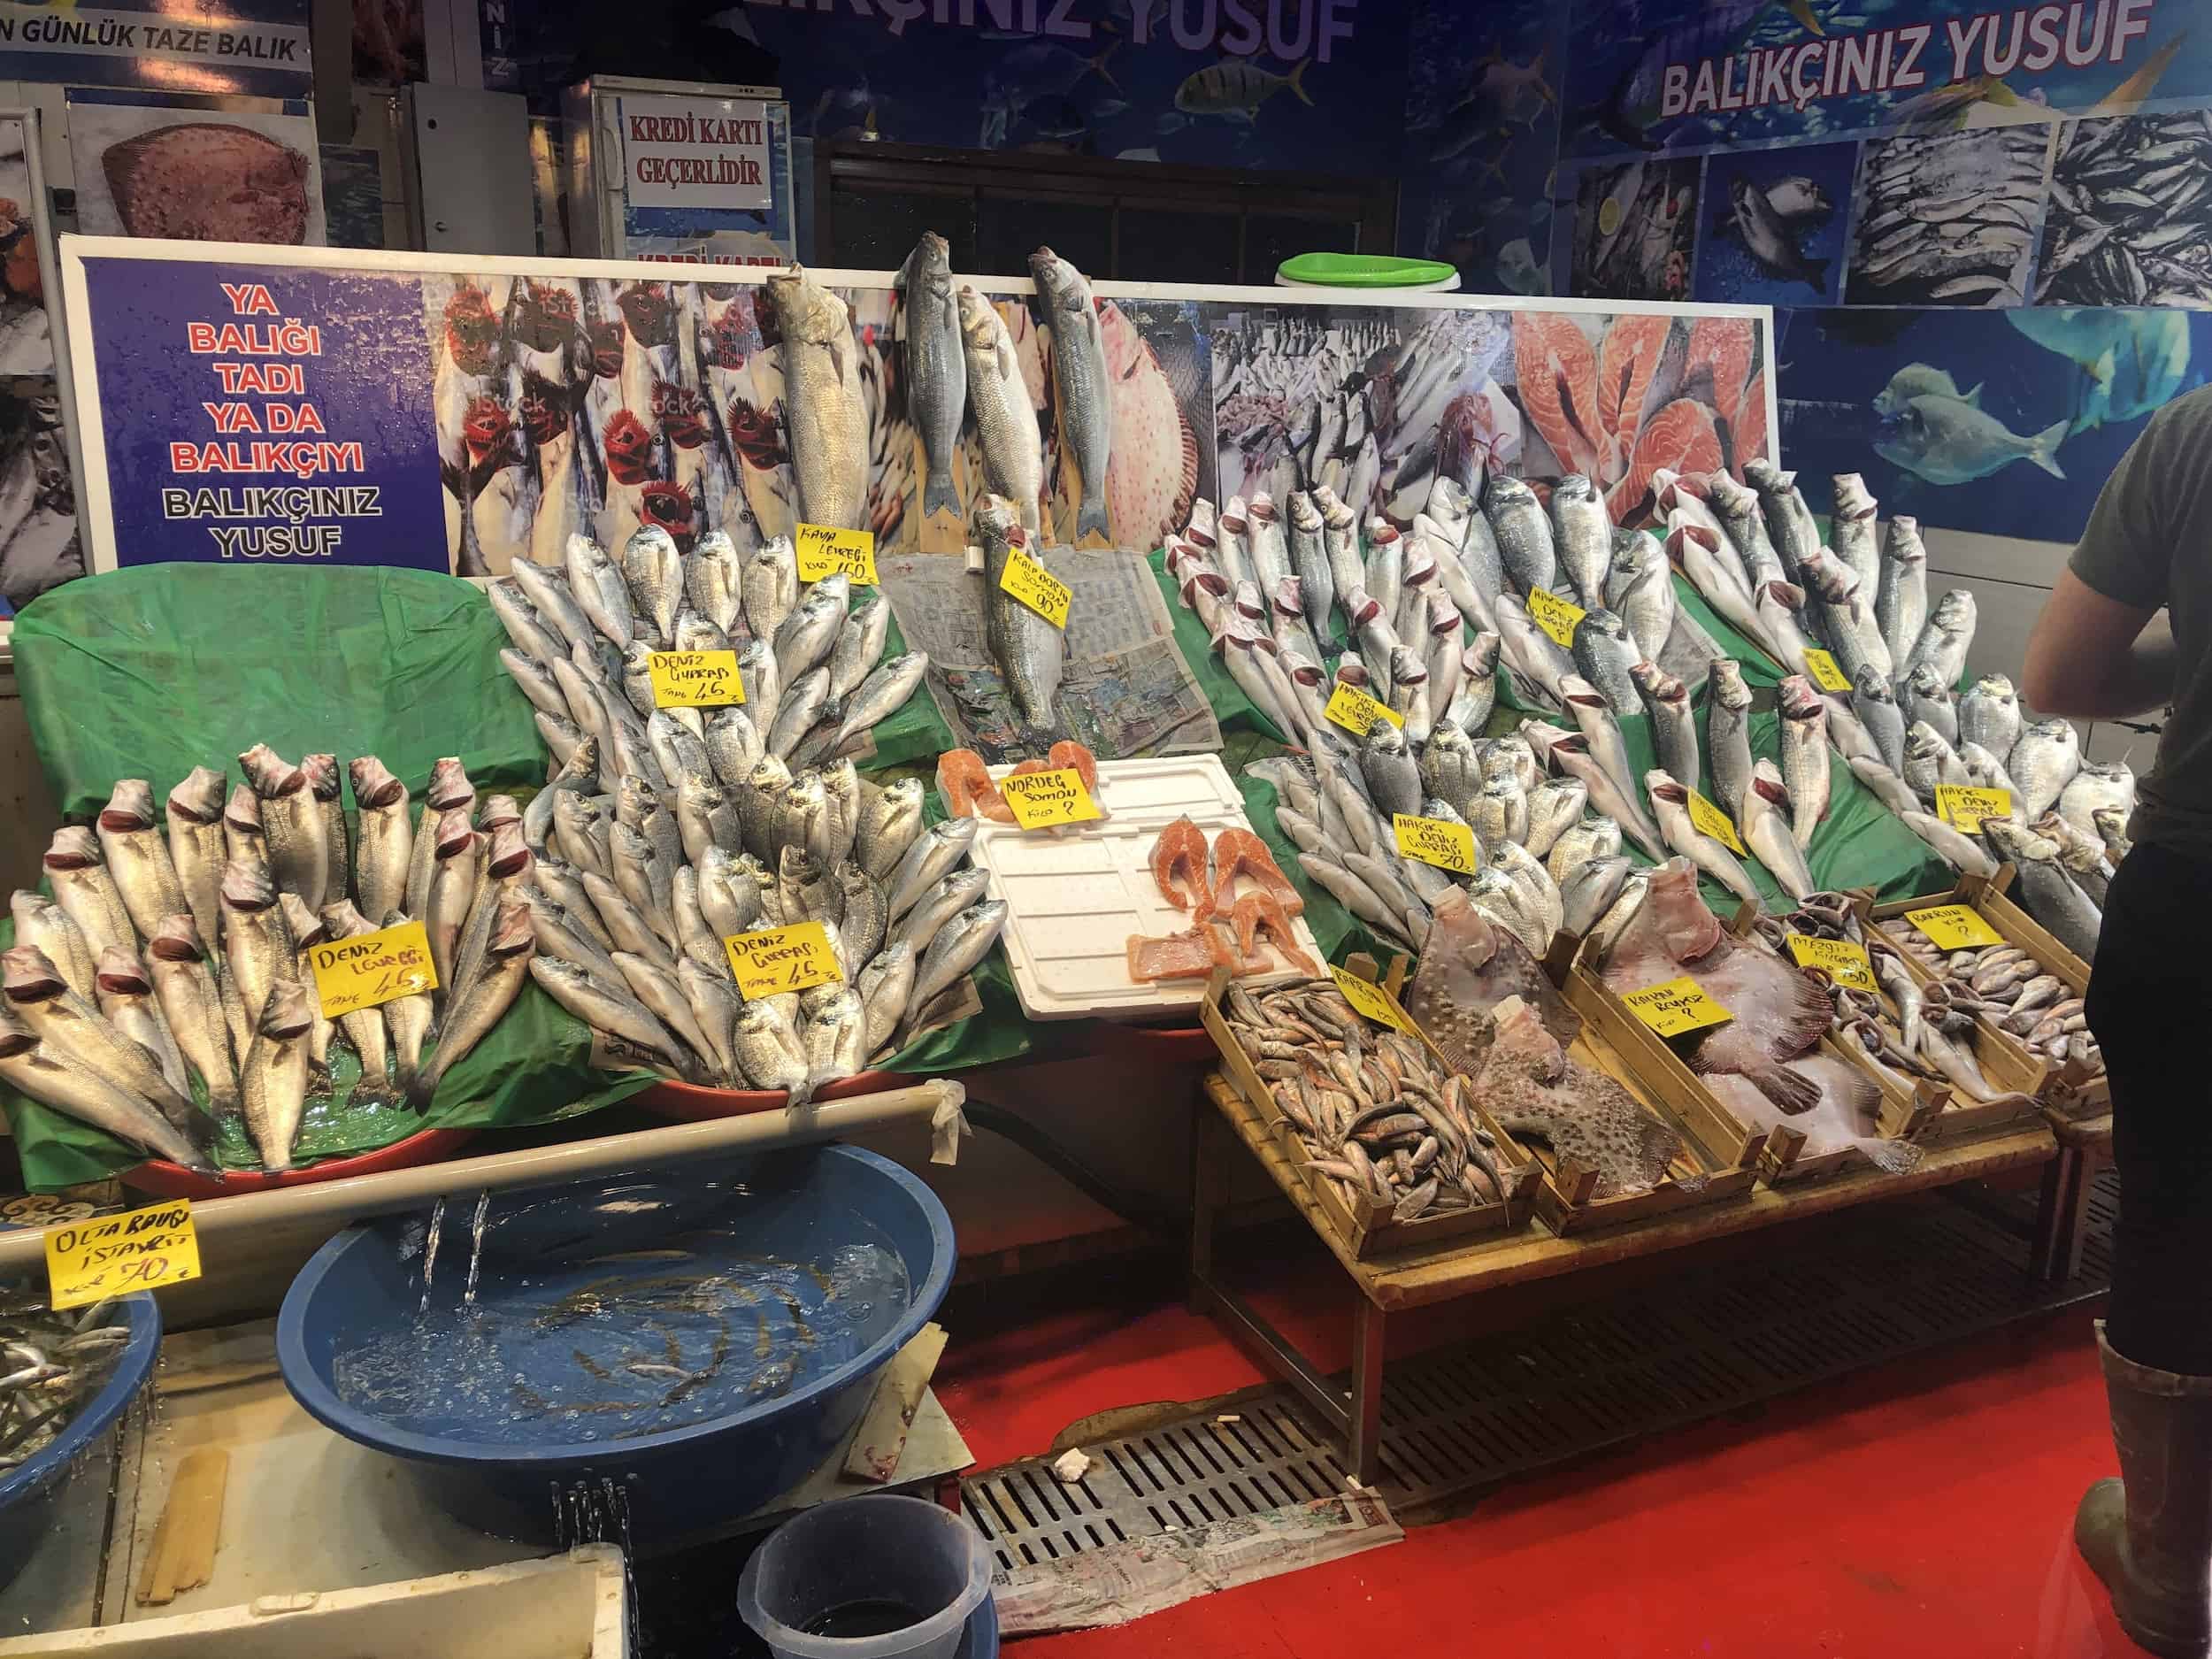 Fresh fish at Karaköy Fish Market near Karaköy Square in Karaköy, Istanbul, Turkey